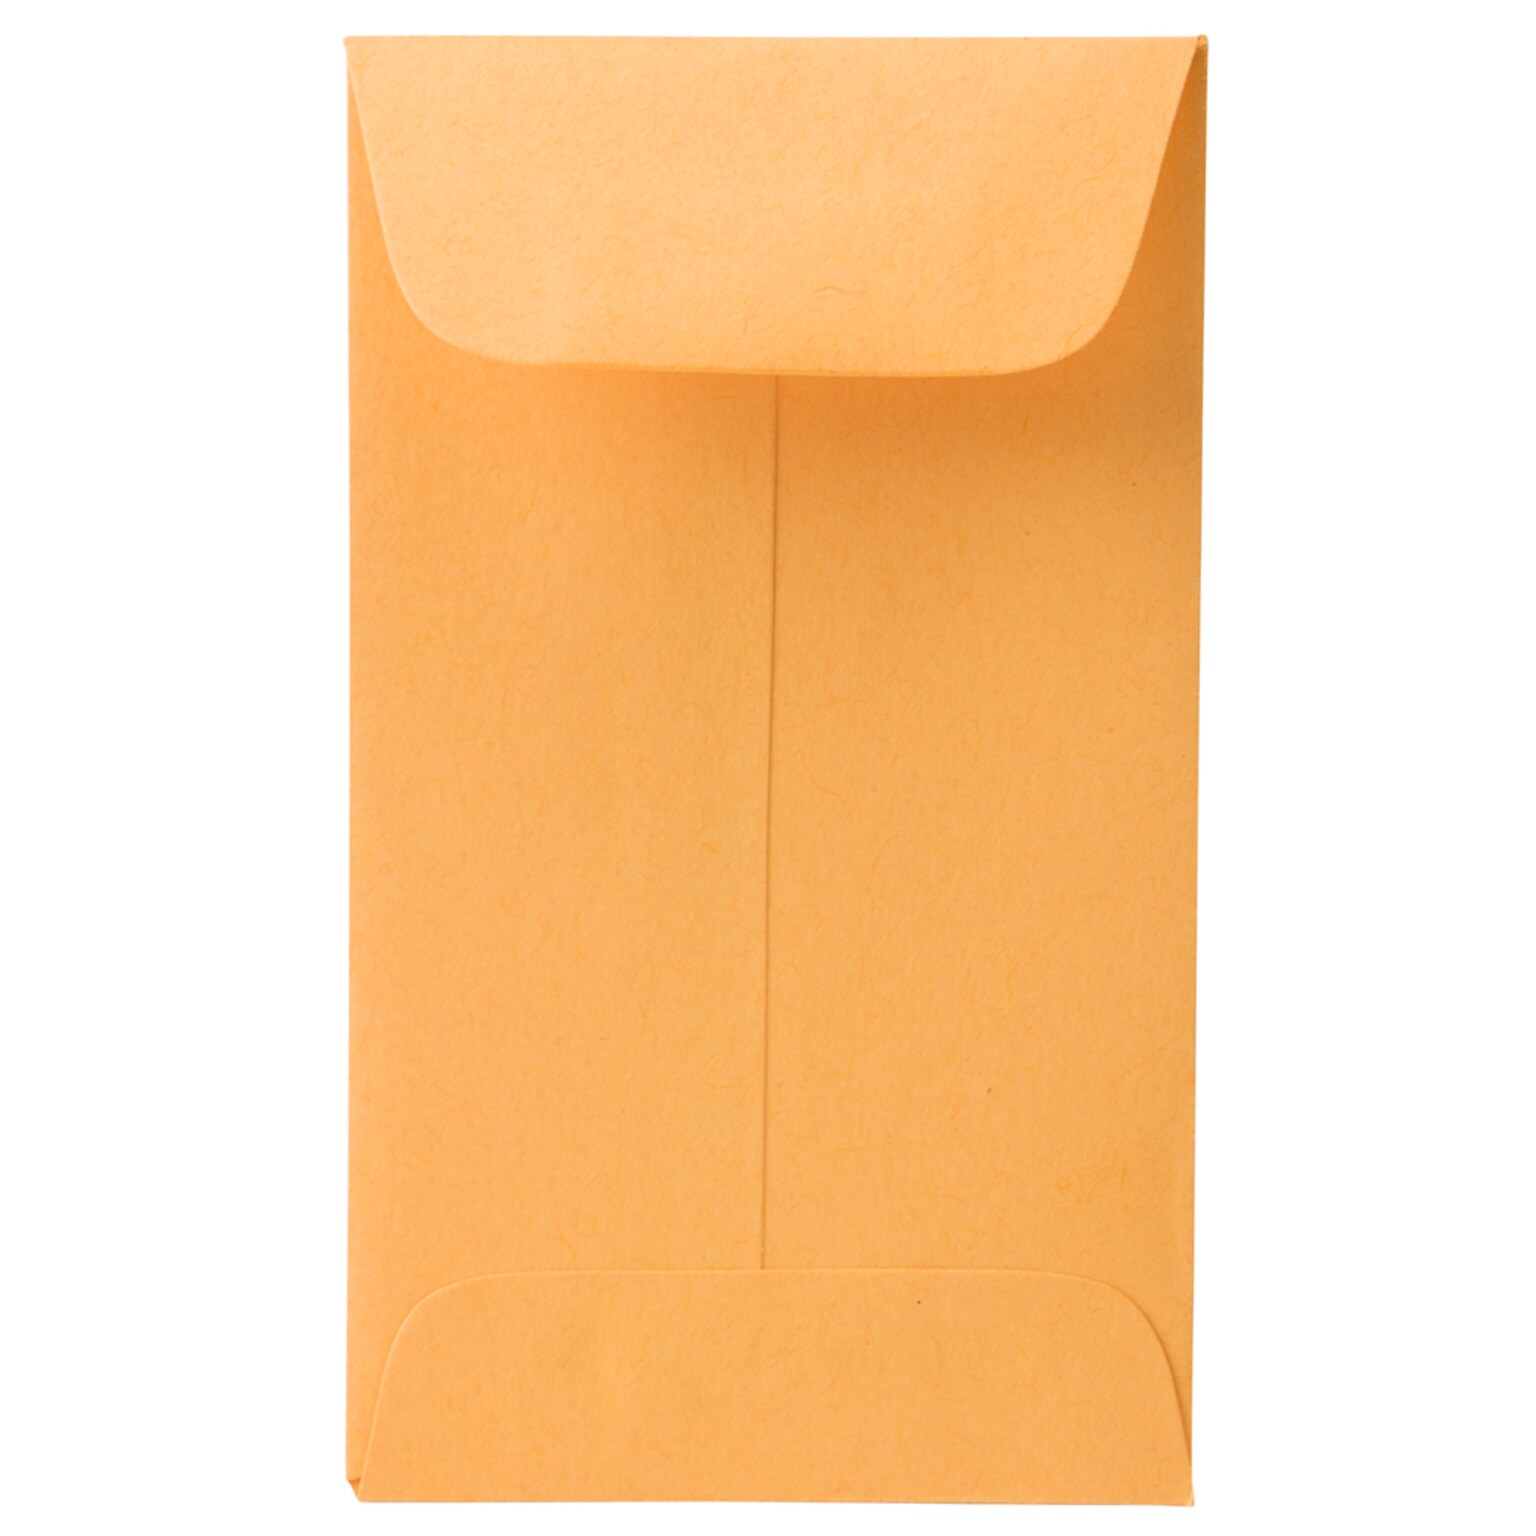 JAM PAPER #3 Coin Envelope, 2 1/2 x 4 1/4, Brown Kraft Manila, 100/pack (49306I)